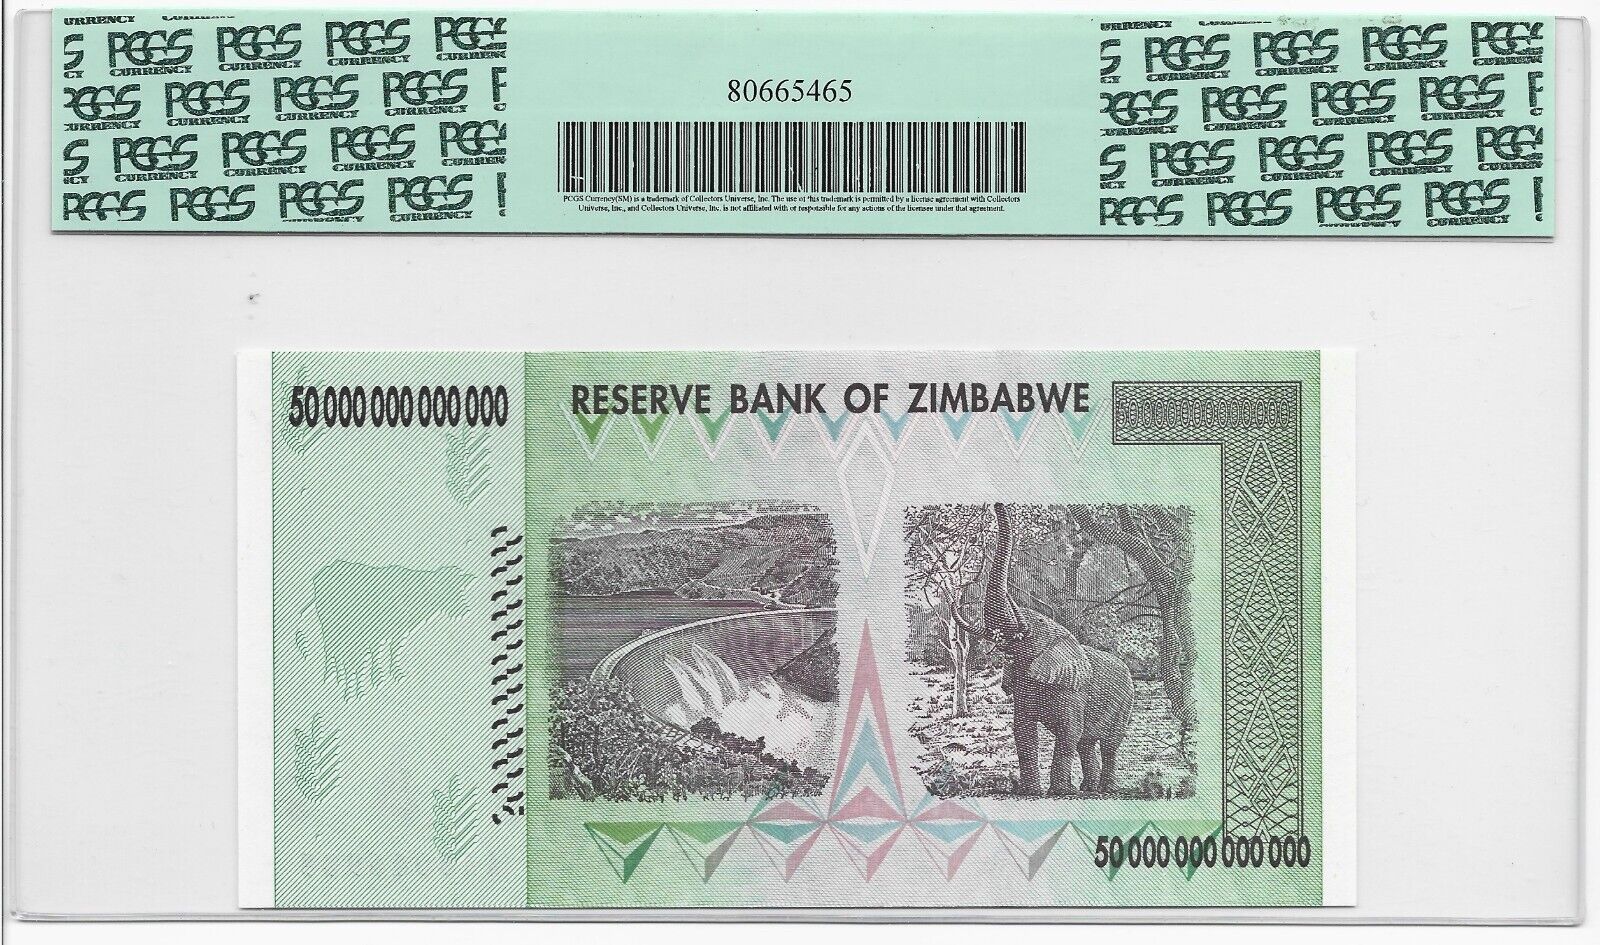 Zimbabwe 50 Trillion Dollars 2008 PCGS 69 PPQ Superb Gem New UNC | eBay